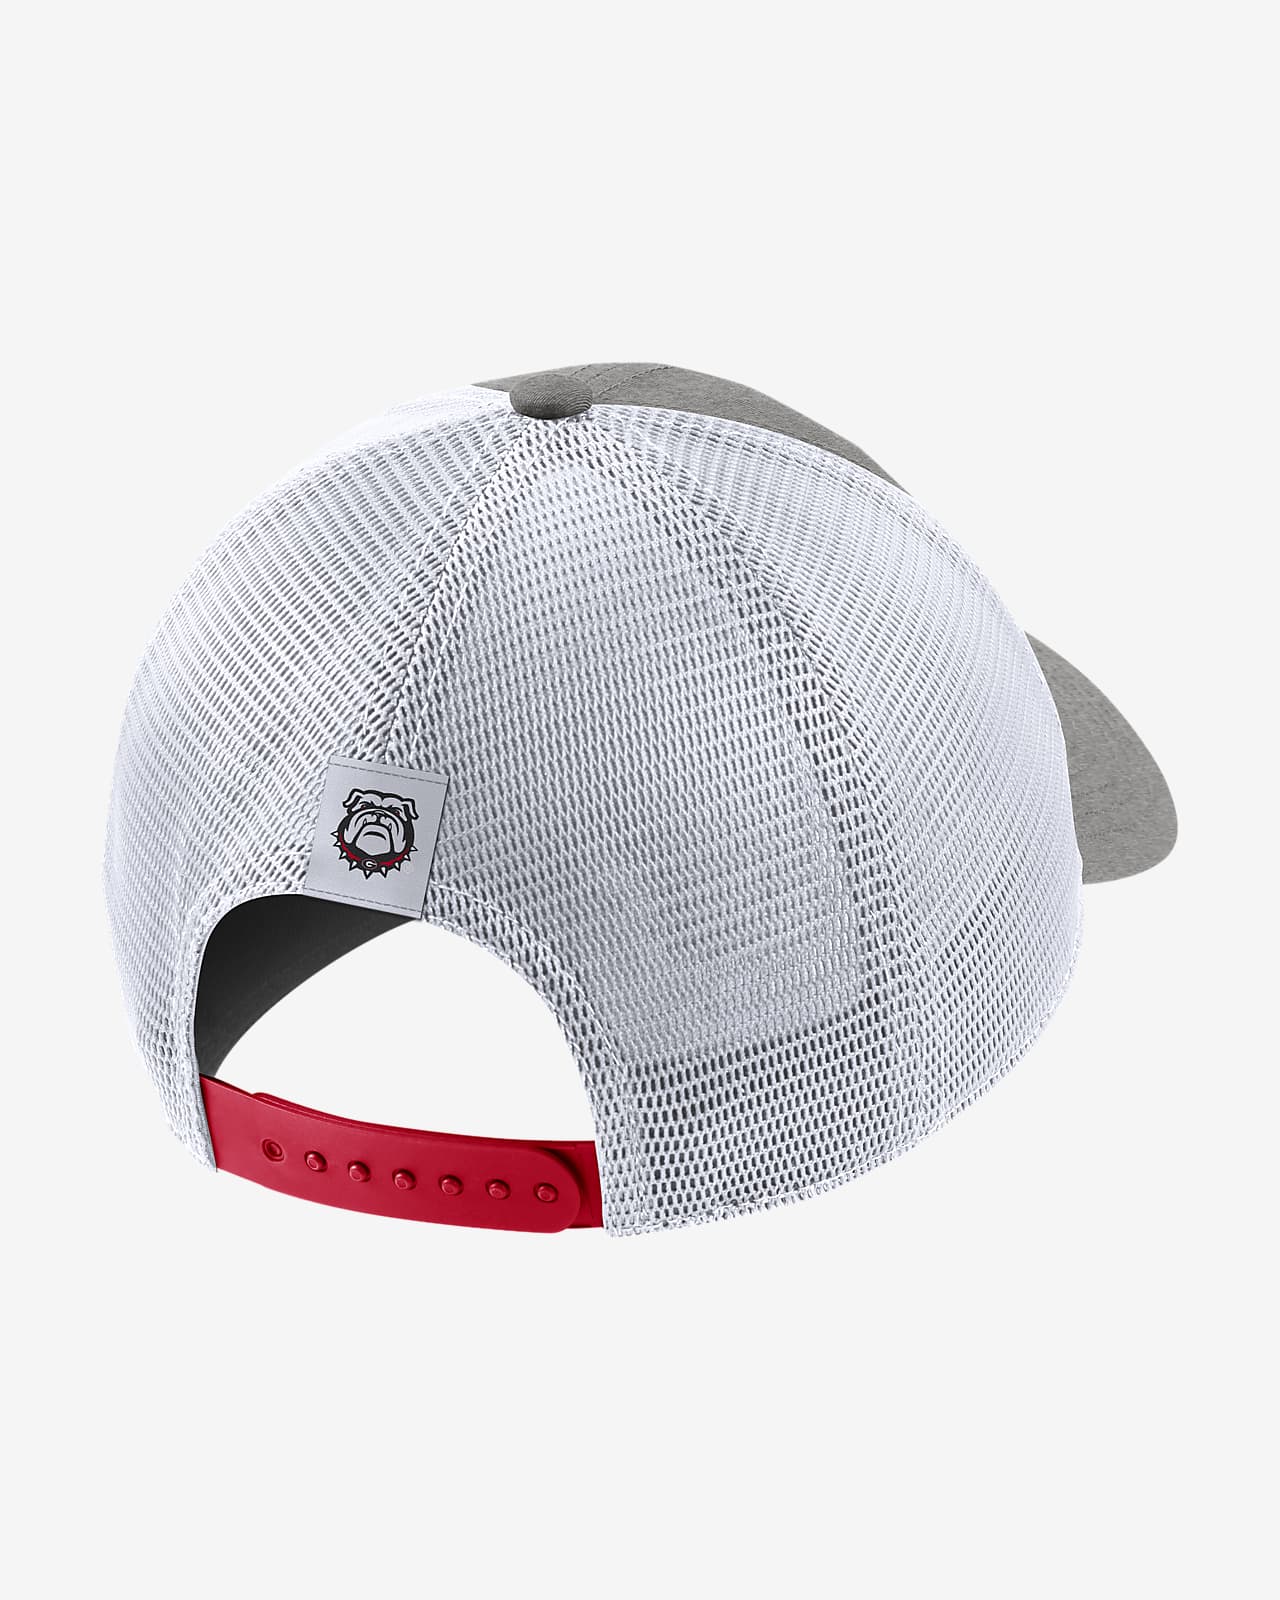 Nike College Legacy91 (Georgia) Hat.